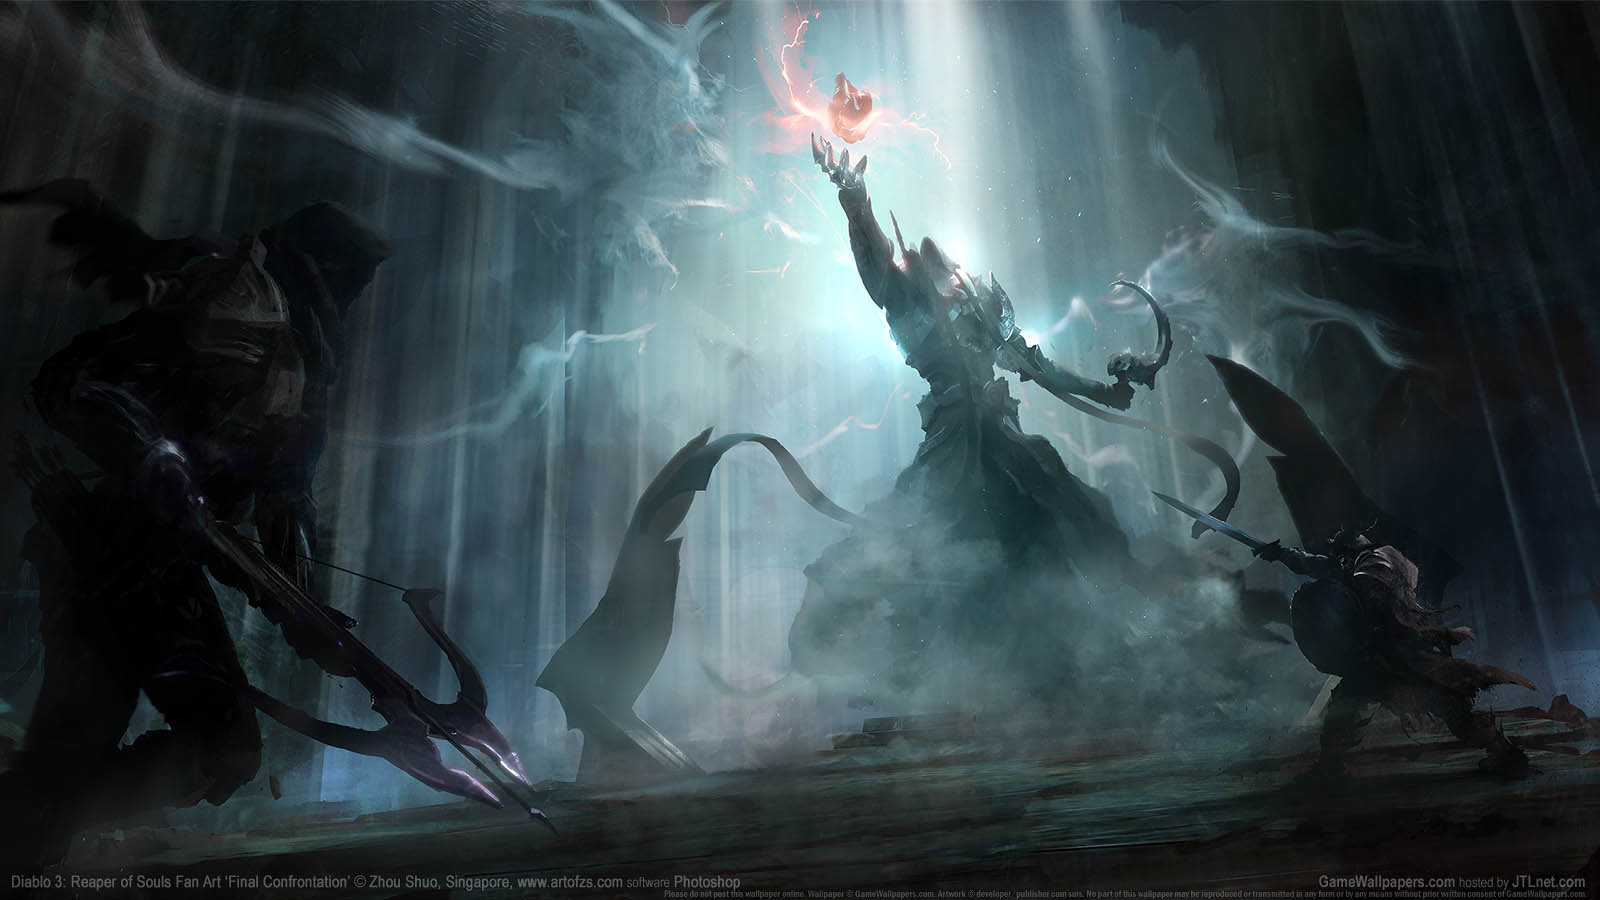 Diablo 3: Reaper of Souls Fan Art fondo de escritorio 06 1600x900